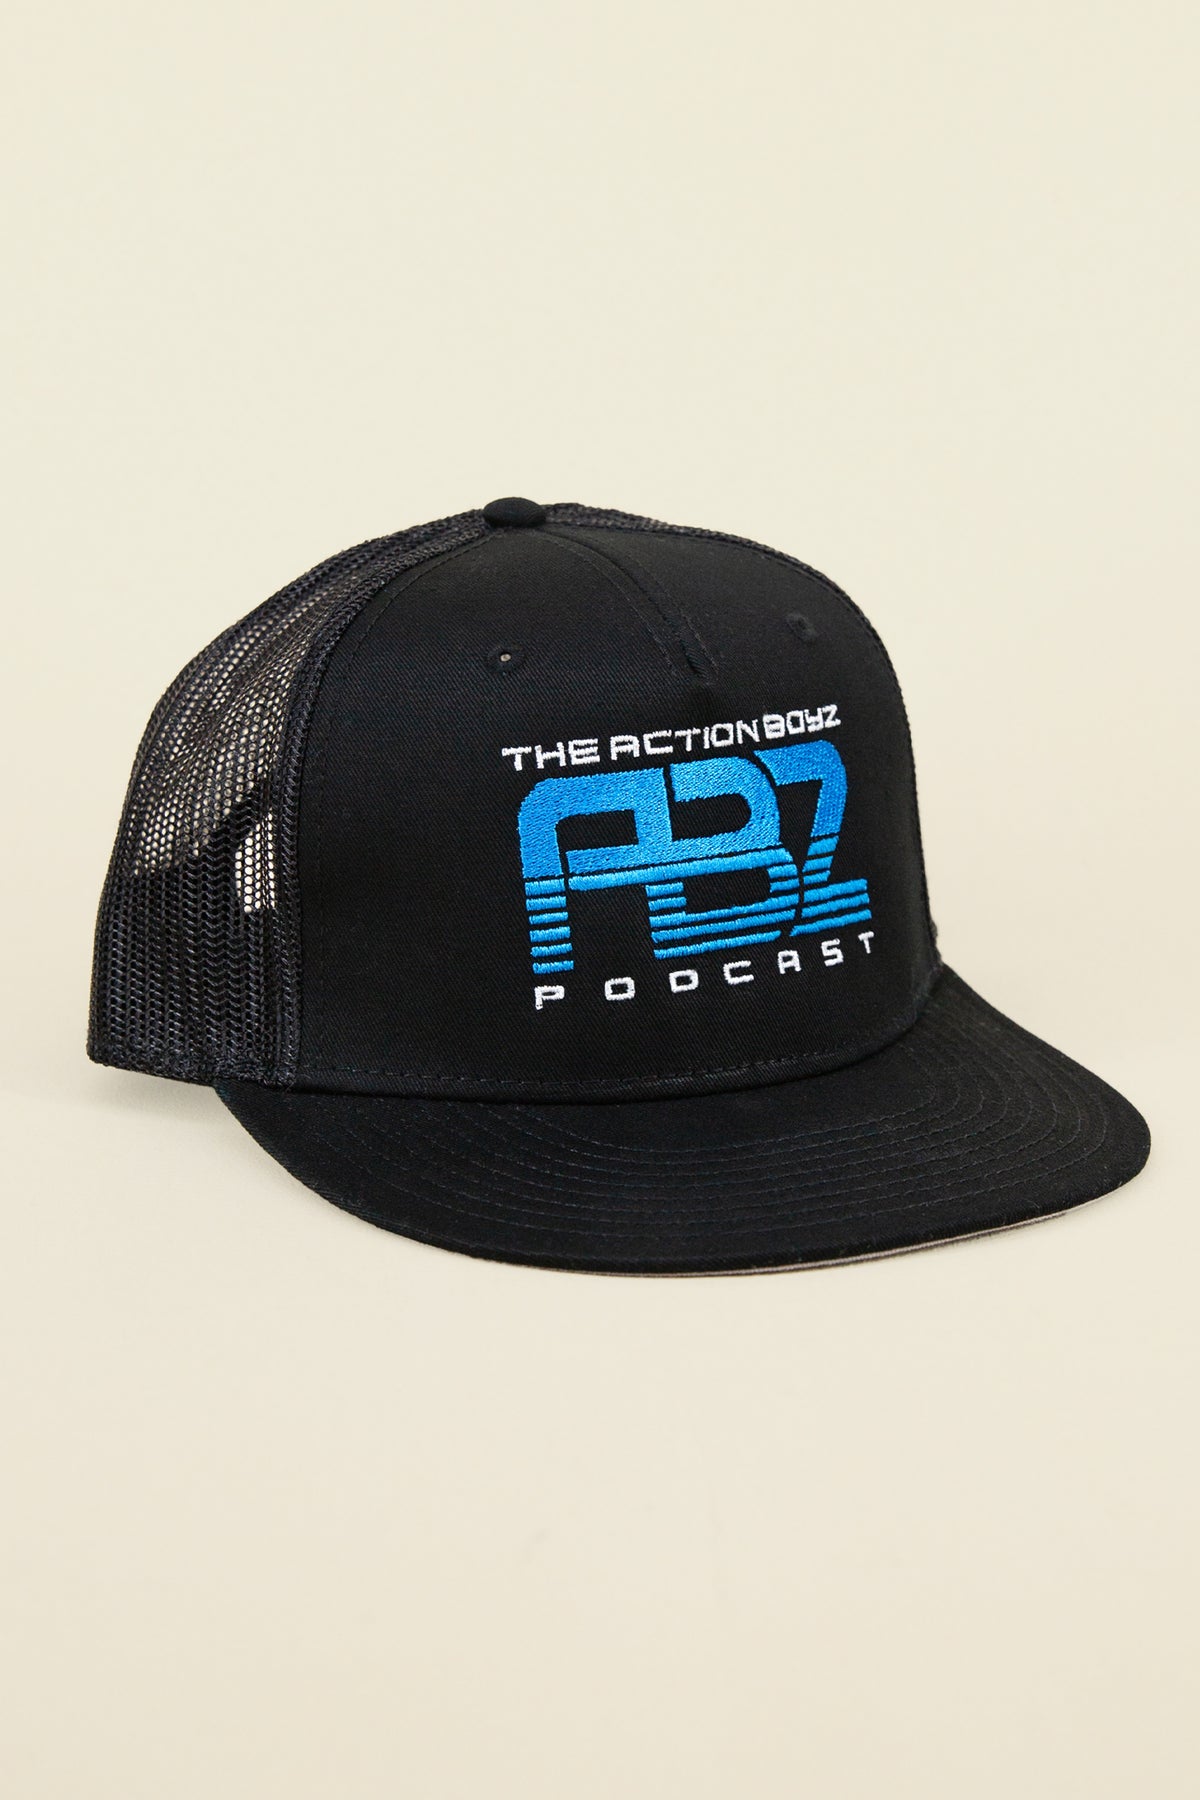 Action Boyz: ABZ logo hat